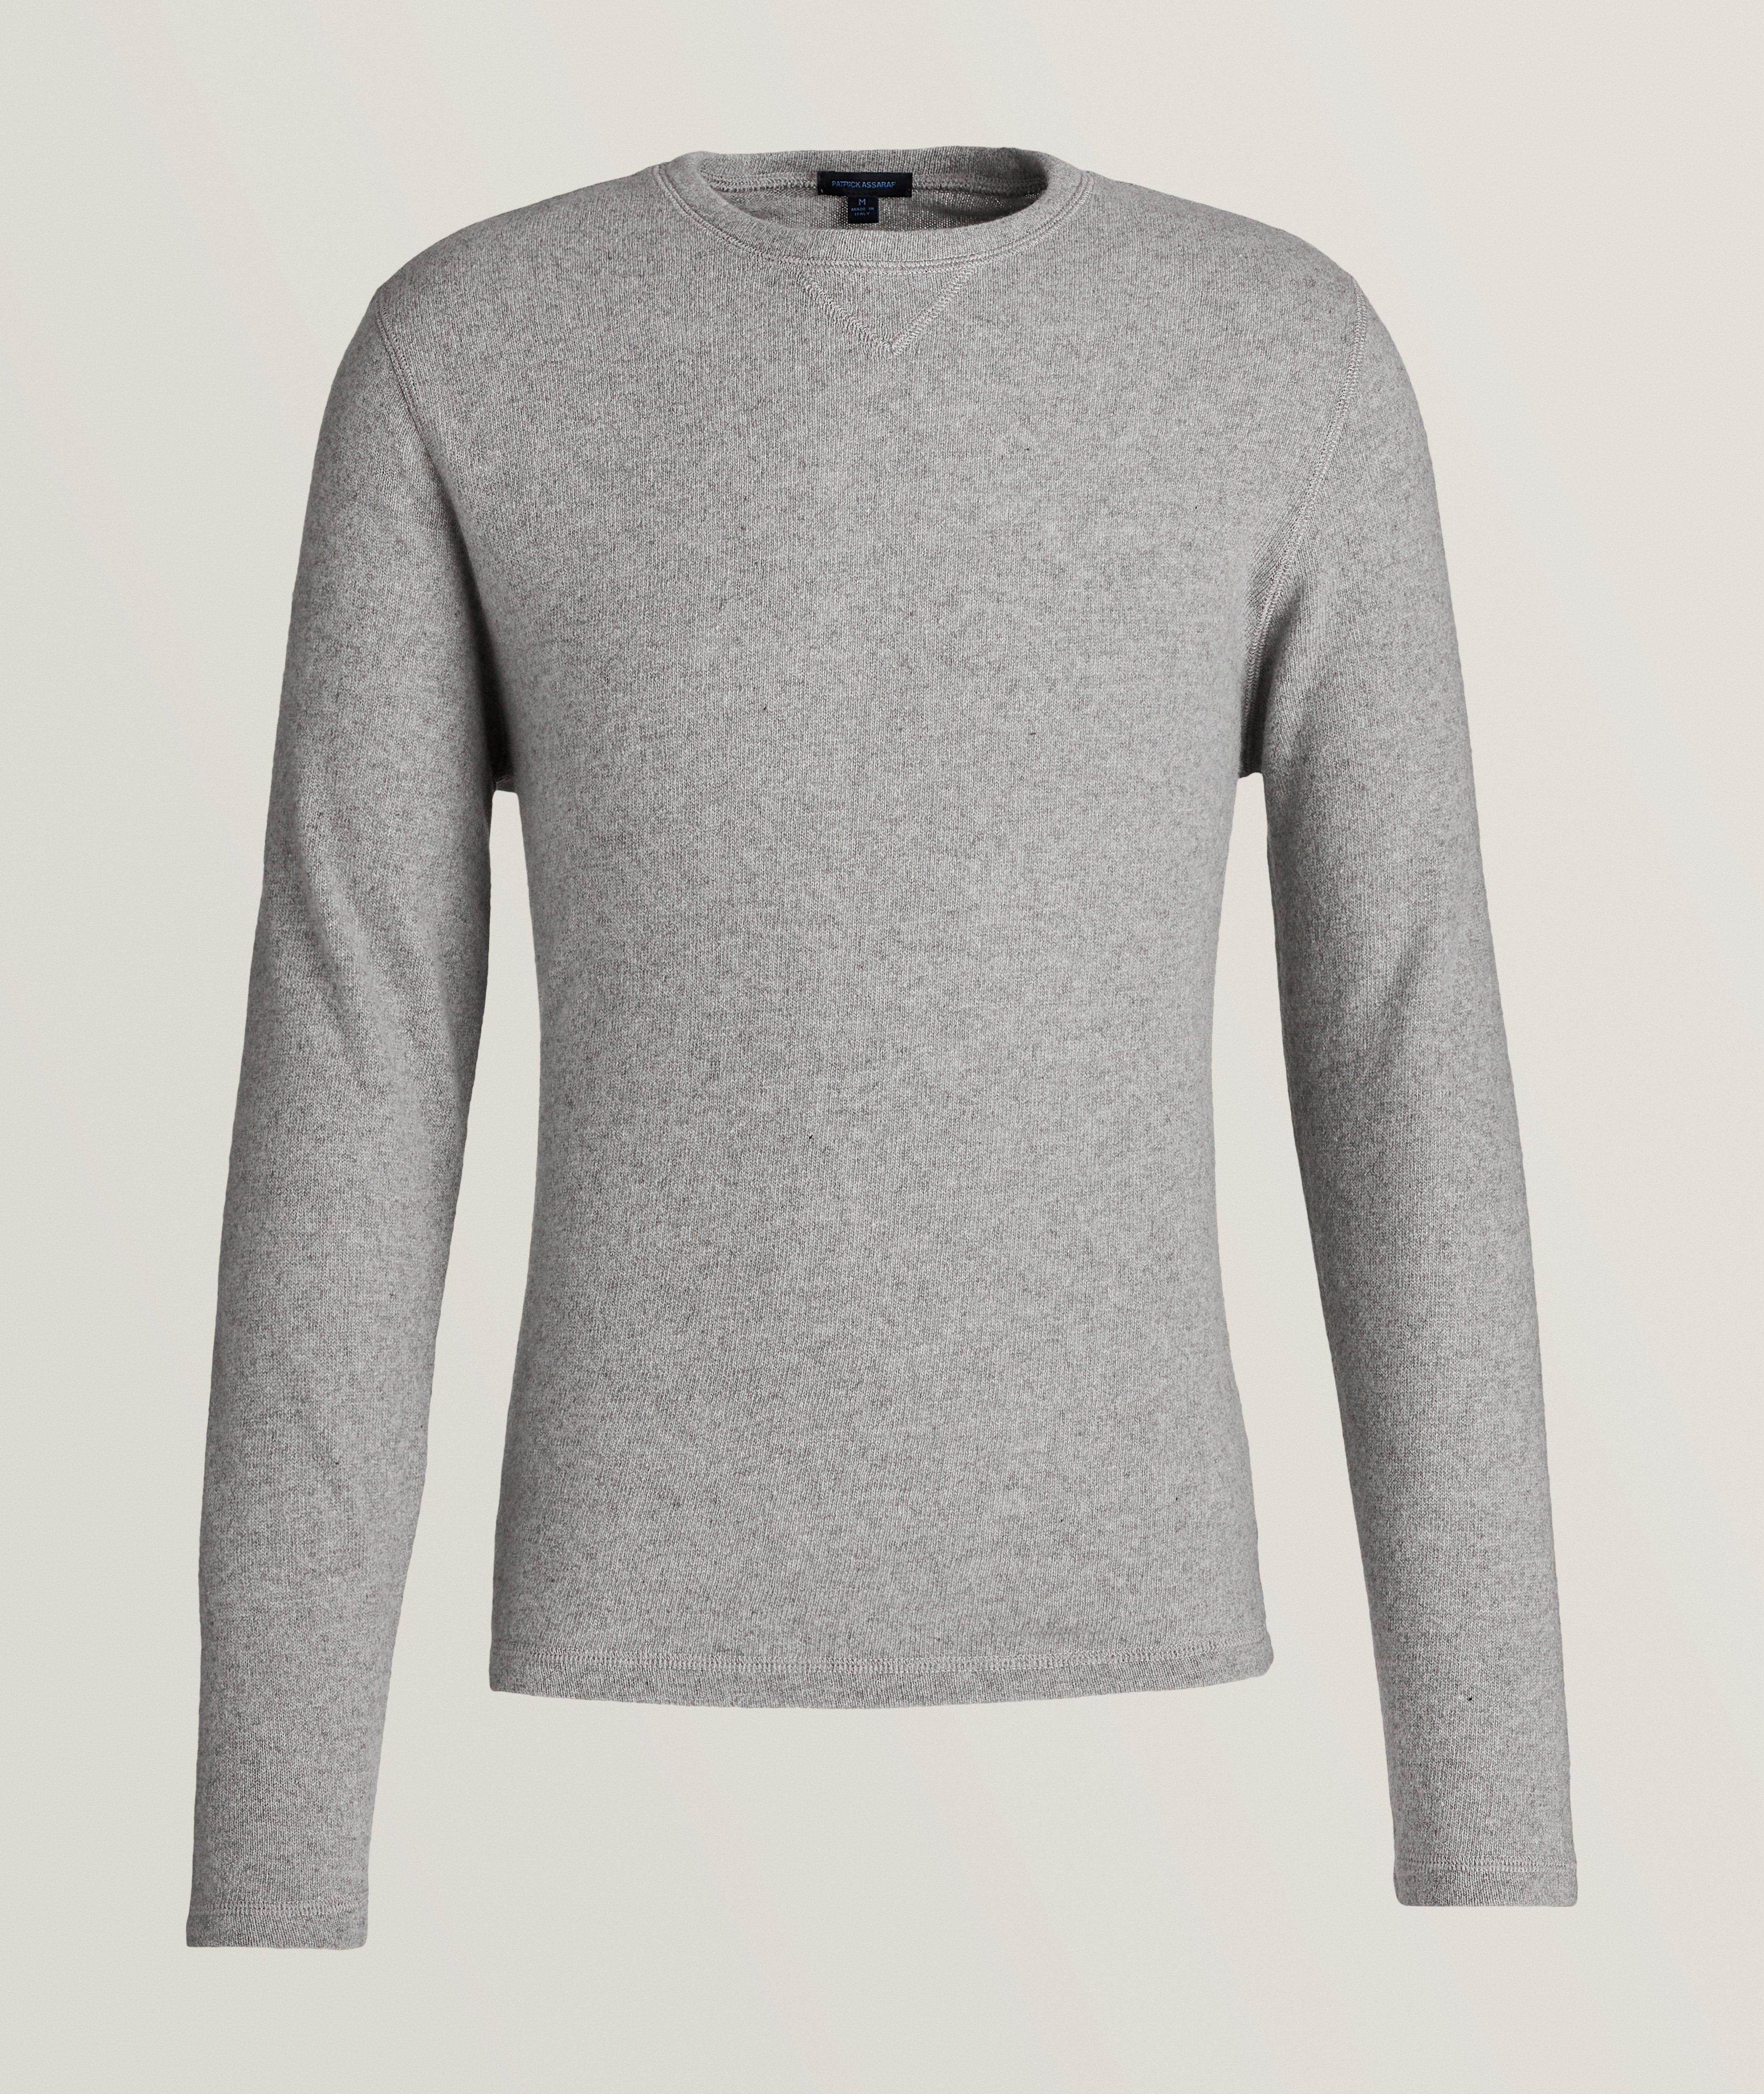 Cashmere-Blend Crewneck Sweater image 0